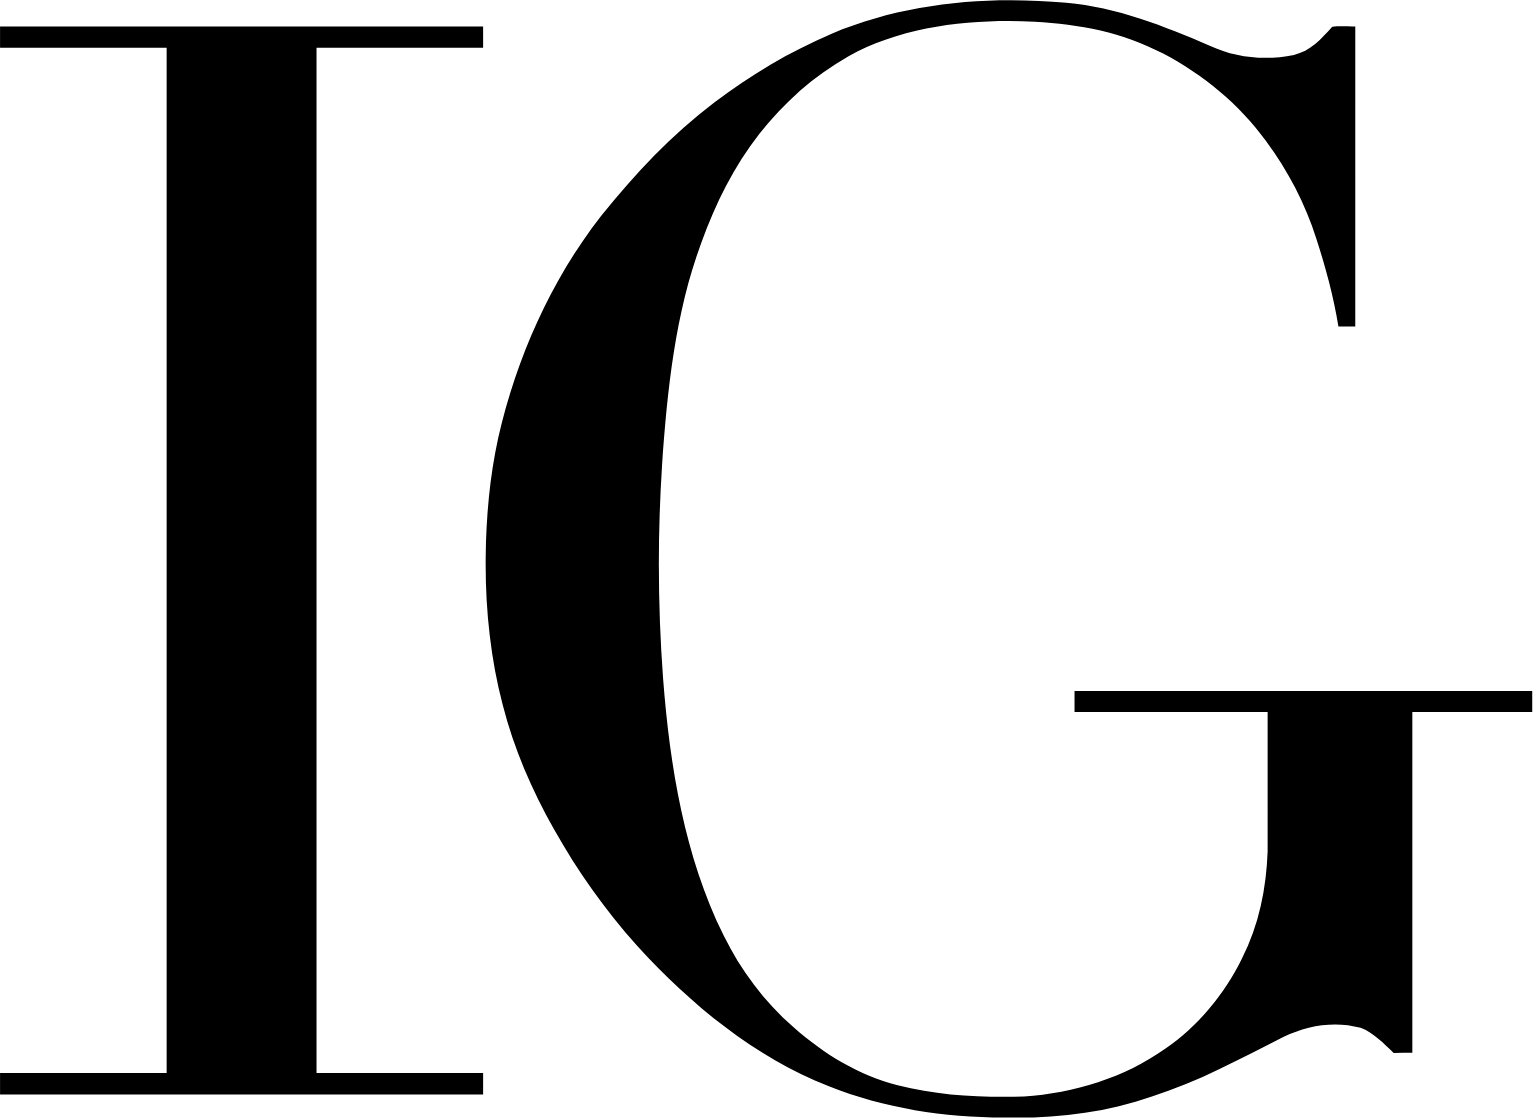 Iguatemi logo (transparent PNG)